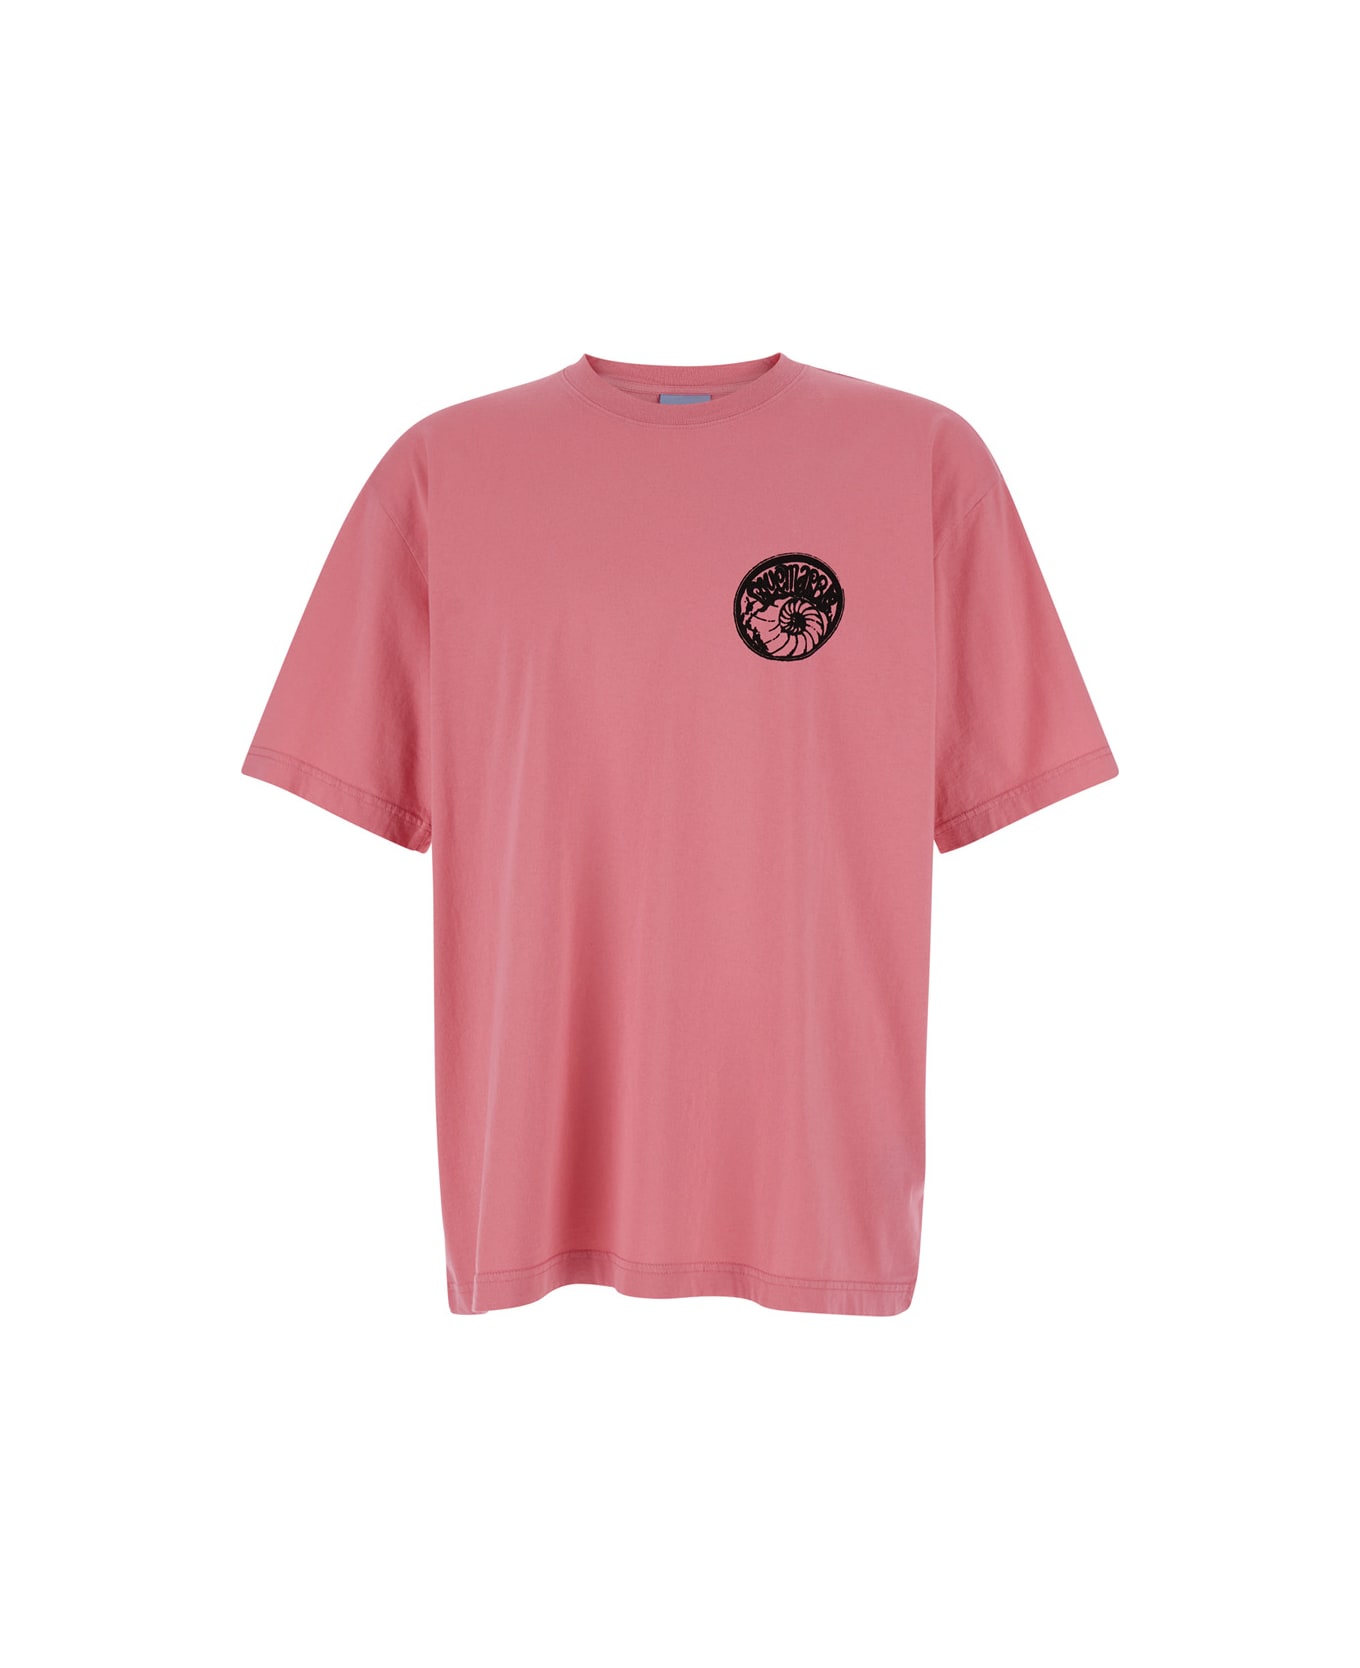 Bluemarble Eye Shell Print T-shirt - Pink